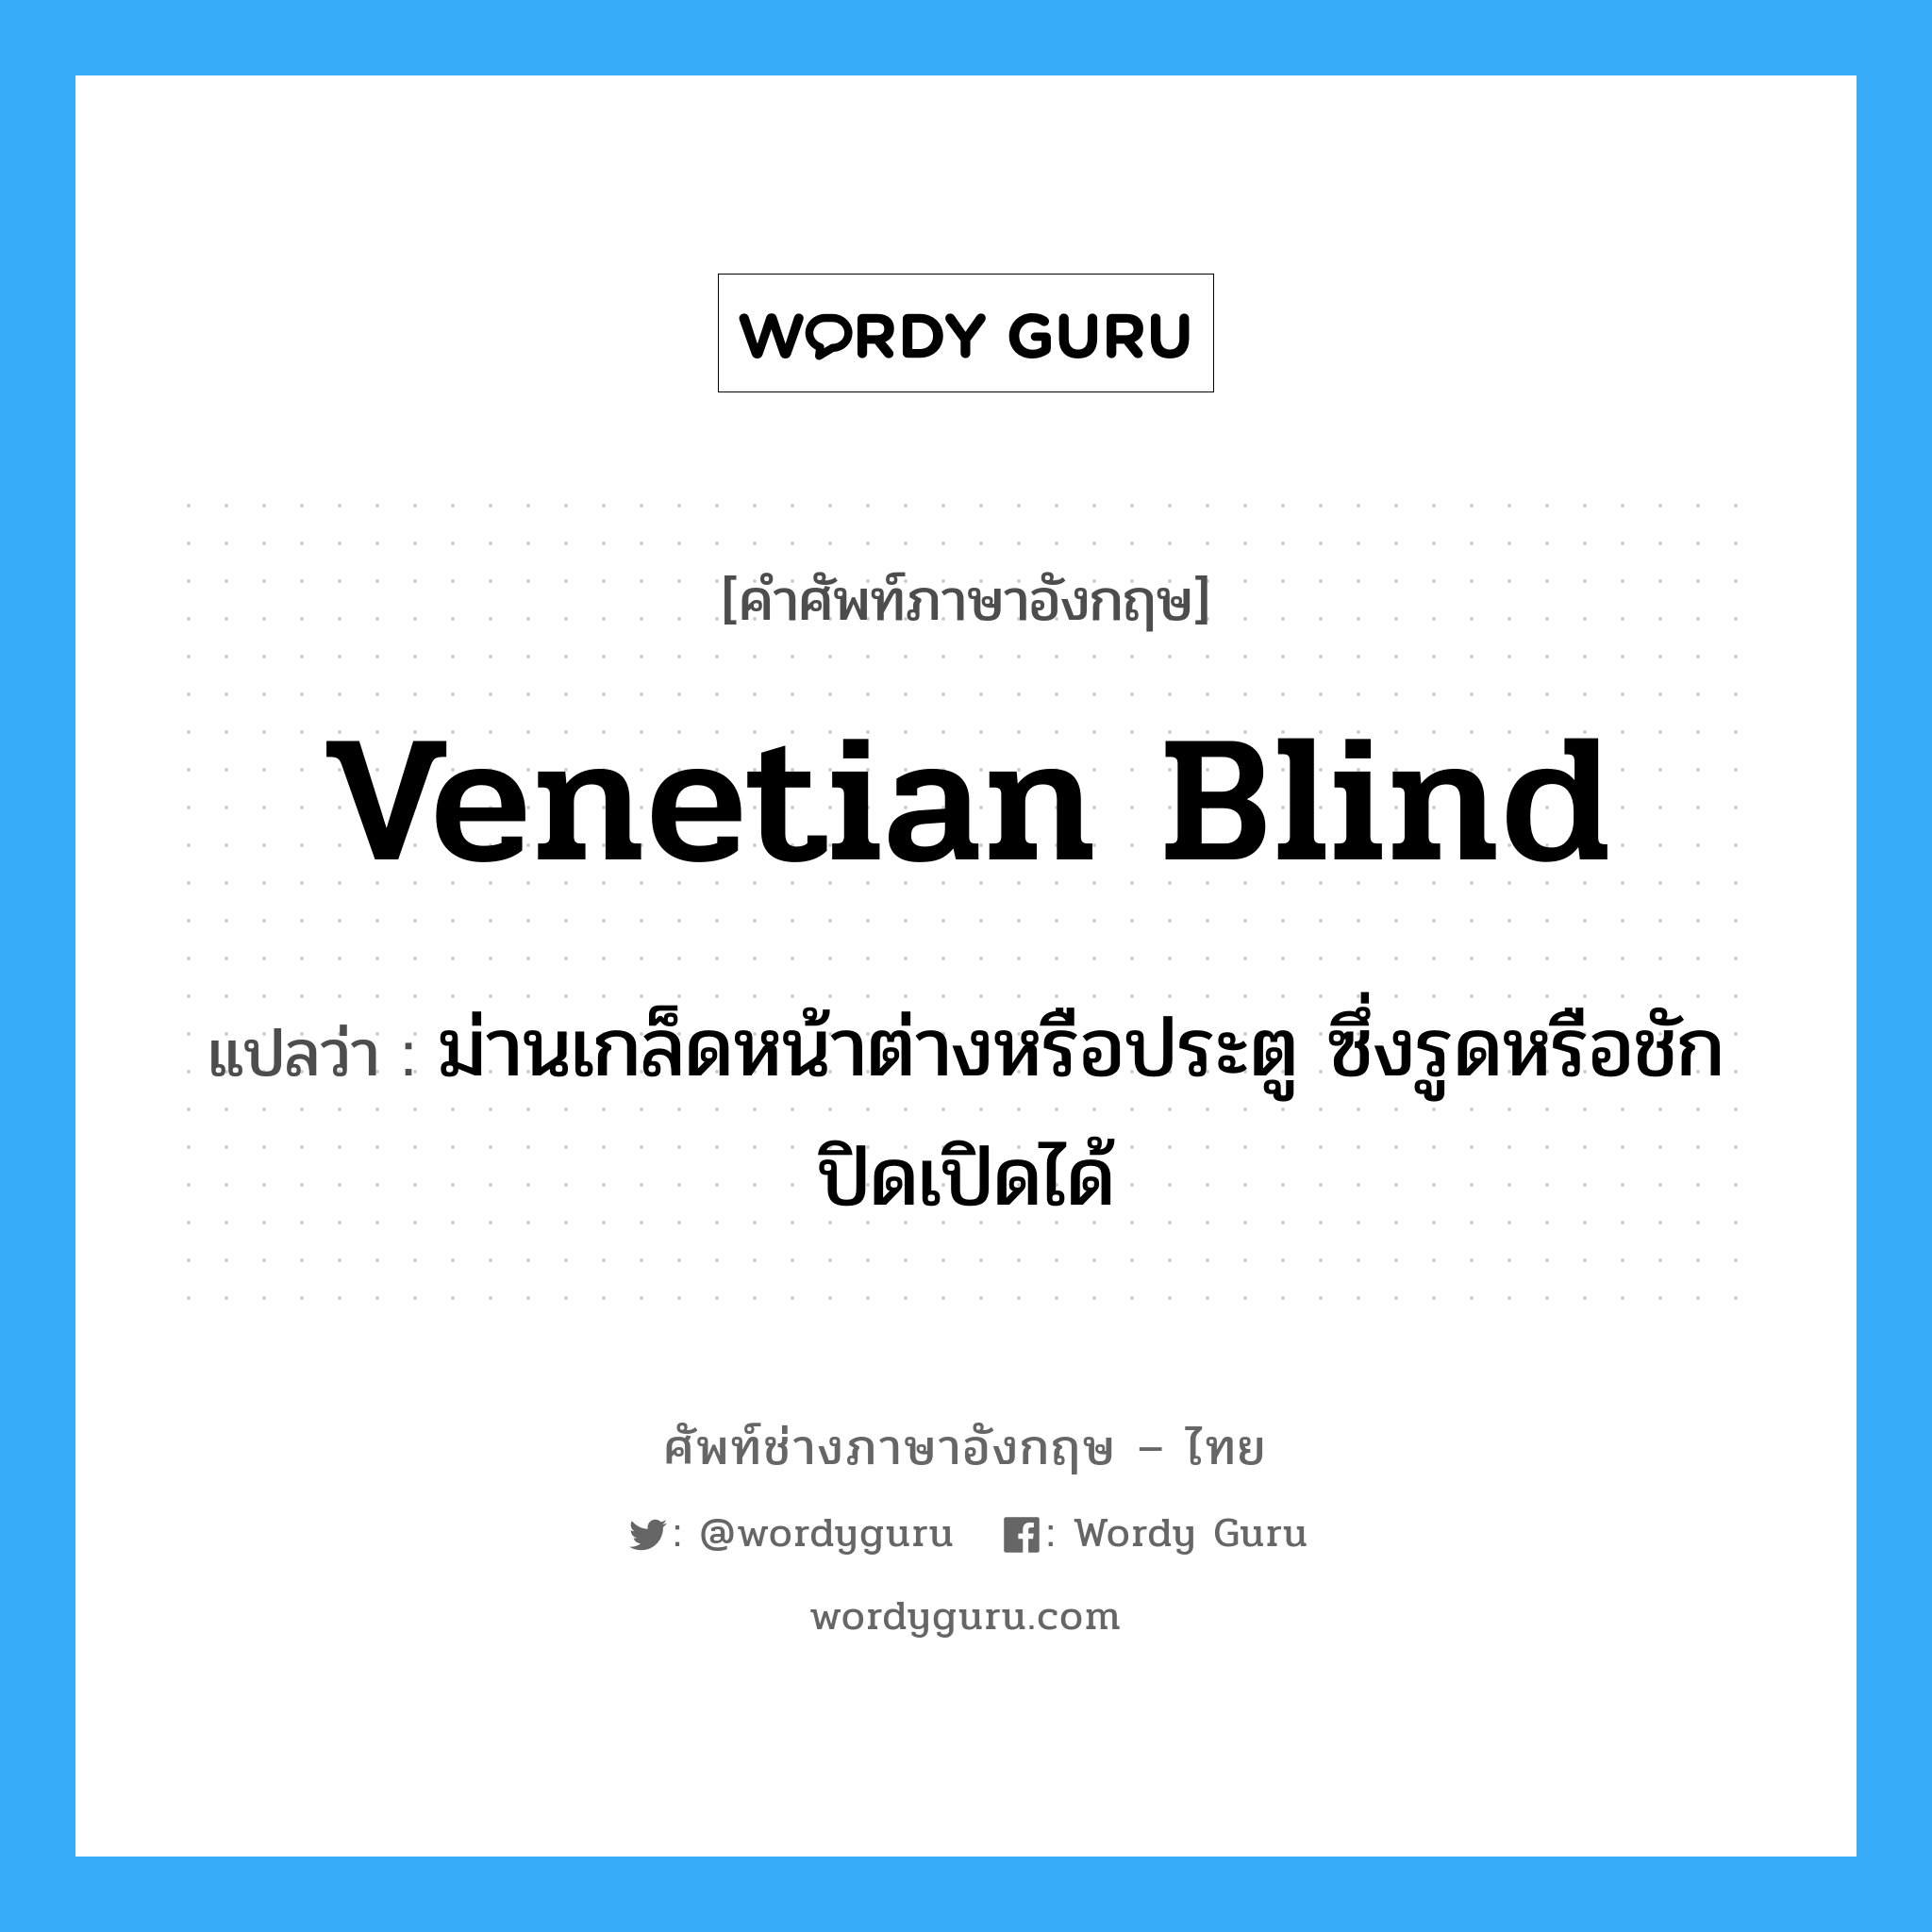 venetian blind แปลว่า?, คำศัพท์ช่างภาษาอังกฤษ - ไทย venetian blind คำศัพท์ภาษาอังกฤษ venetian blind แปลว่า ม่านเกล็ดหน้าต่างหรือประตู ซึ่งรูดหรือชักปิดเปิดได้